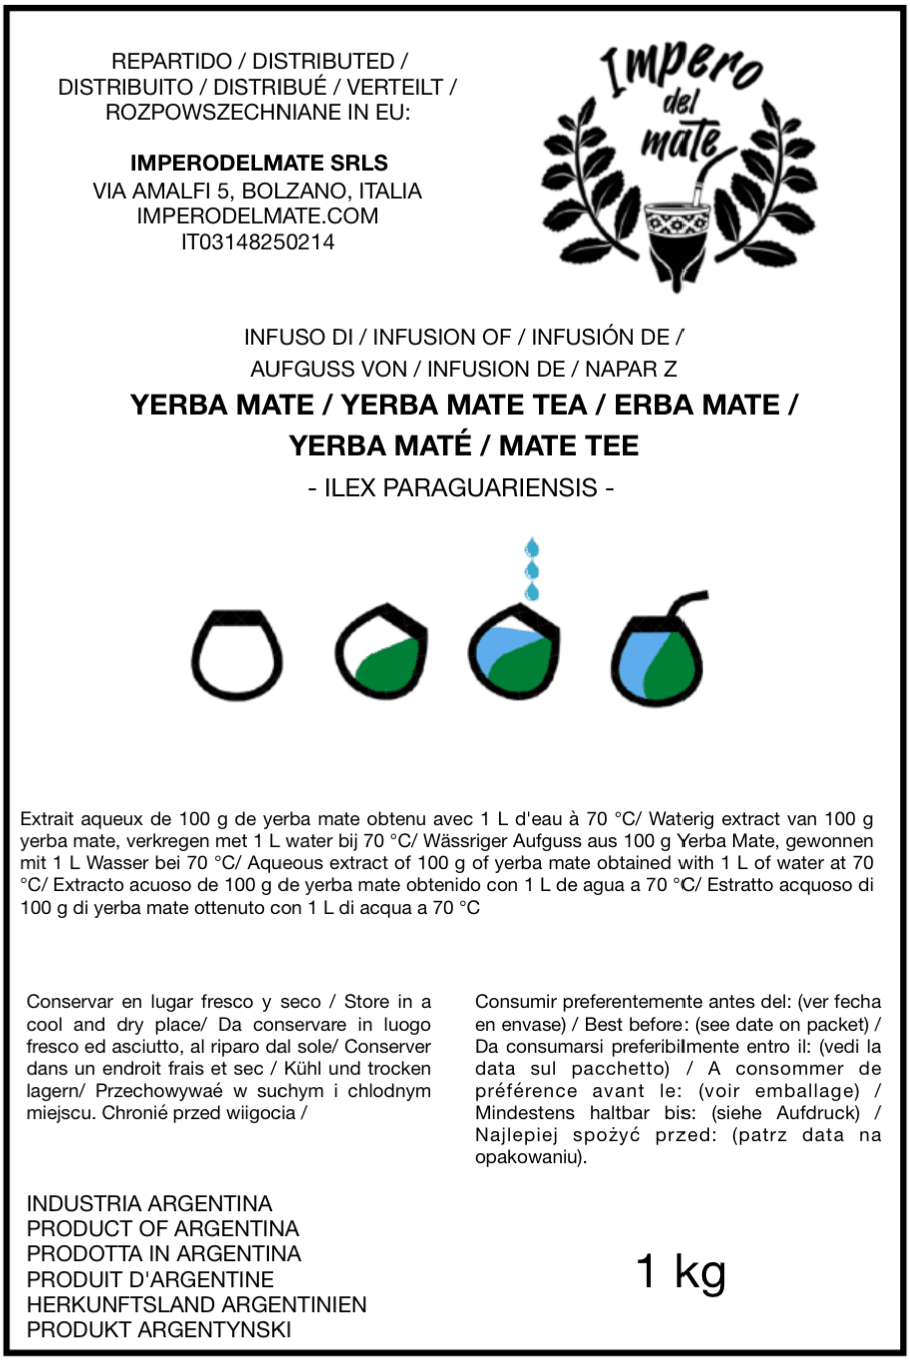 Yerba Mate - Cruz de Malta 1Kg - imperodelmate.com